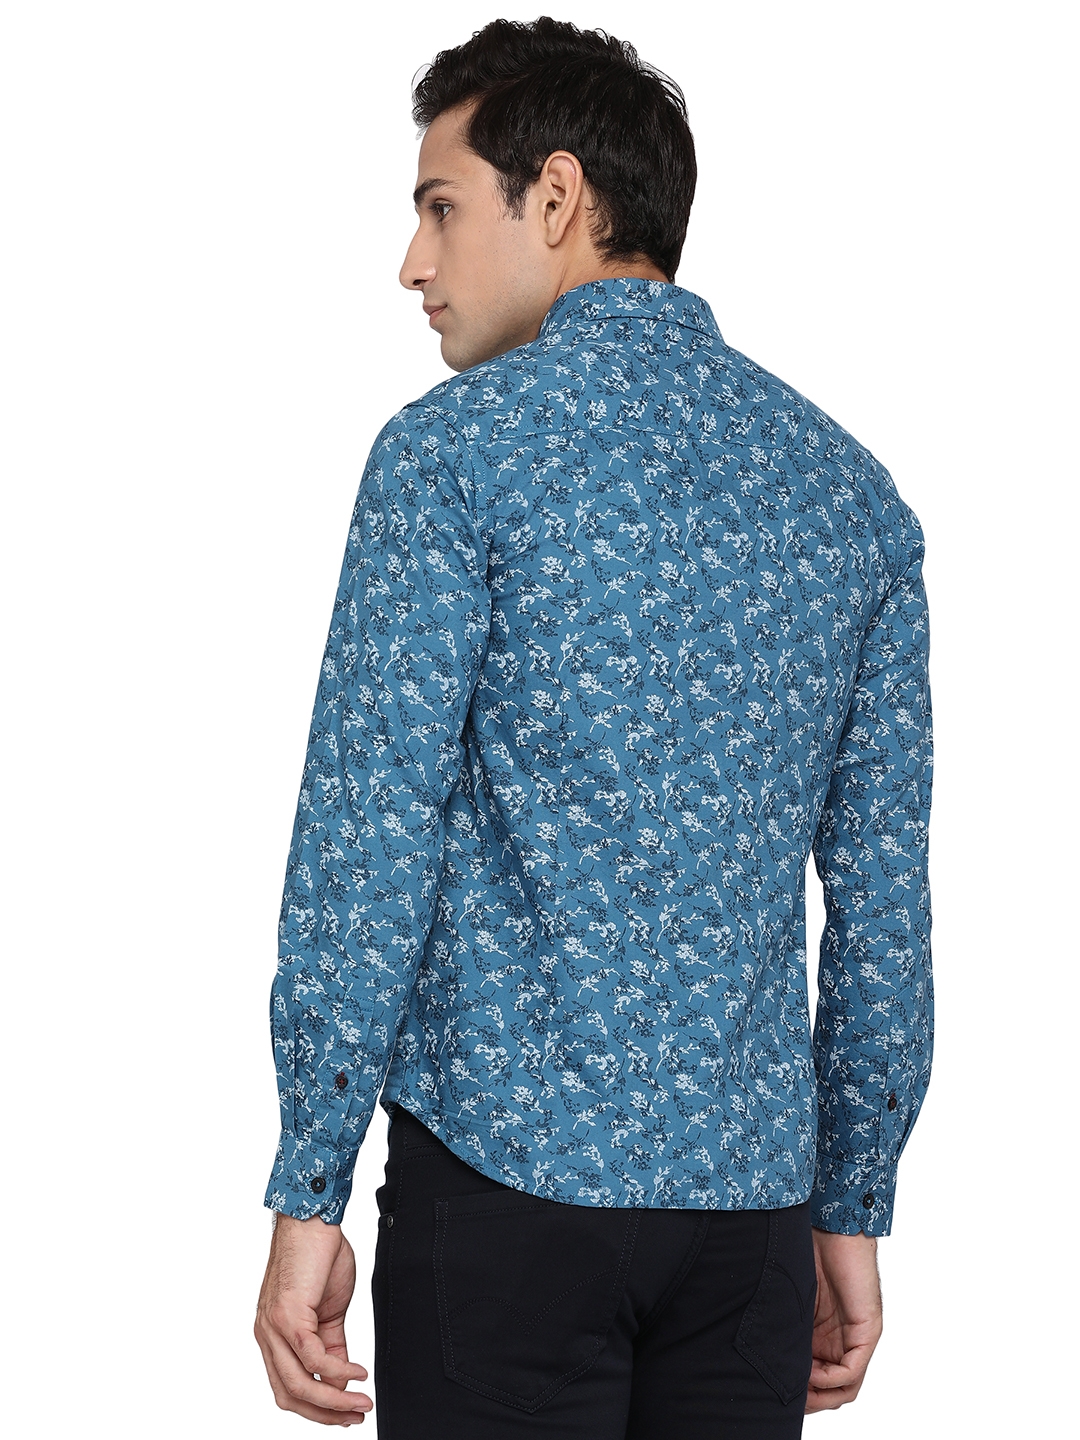 Greenfibre | Provincial Blue Printed Slim Fit Semi Casual Shirt | Greenfibre 2